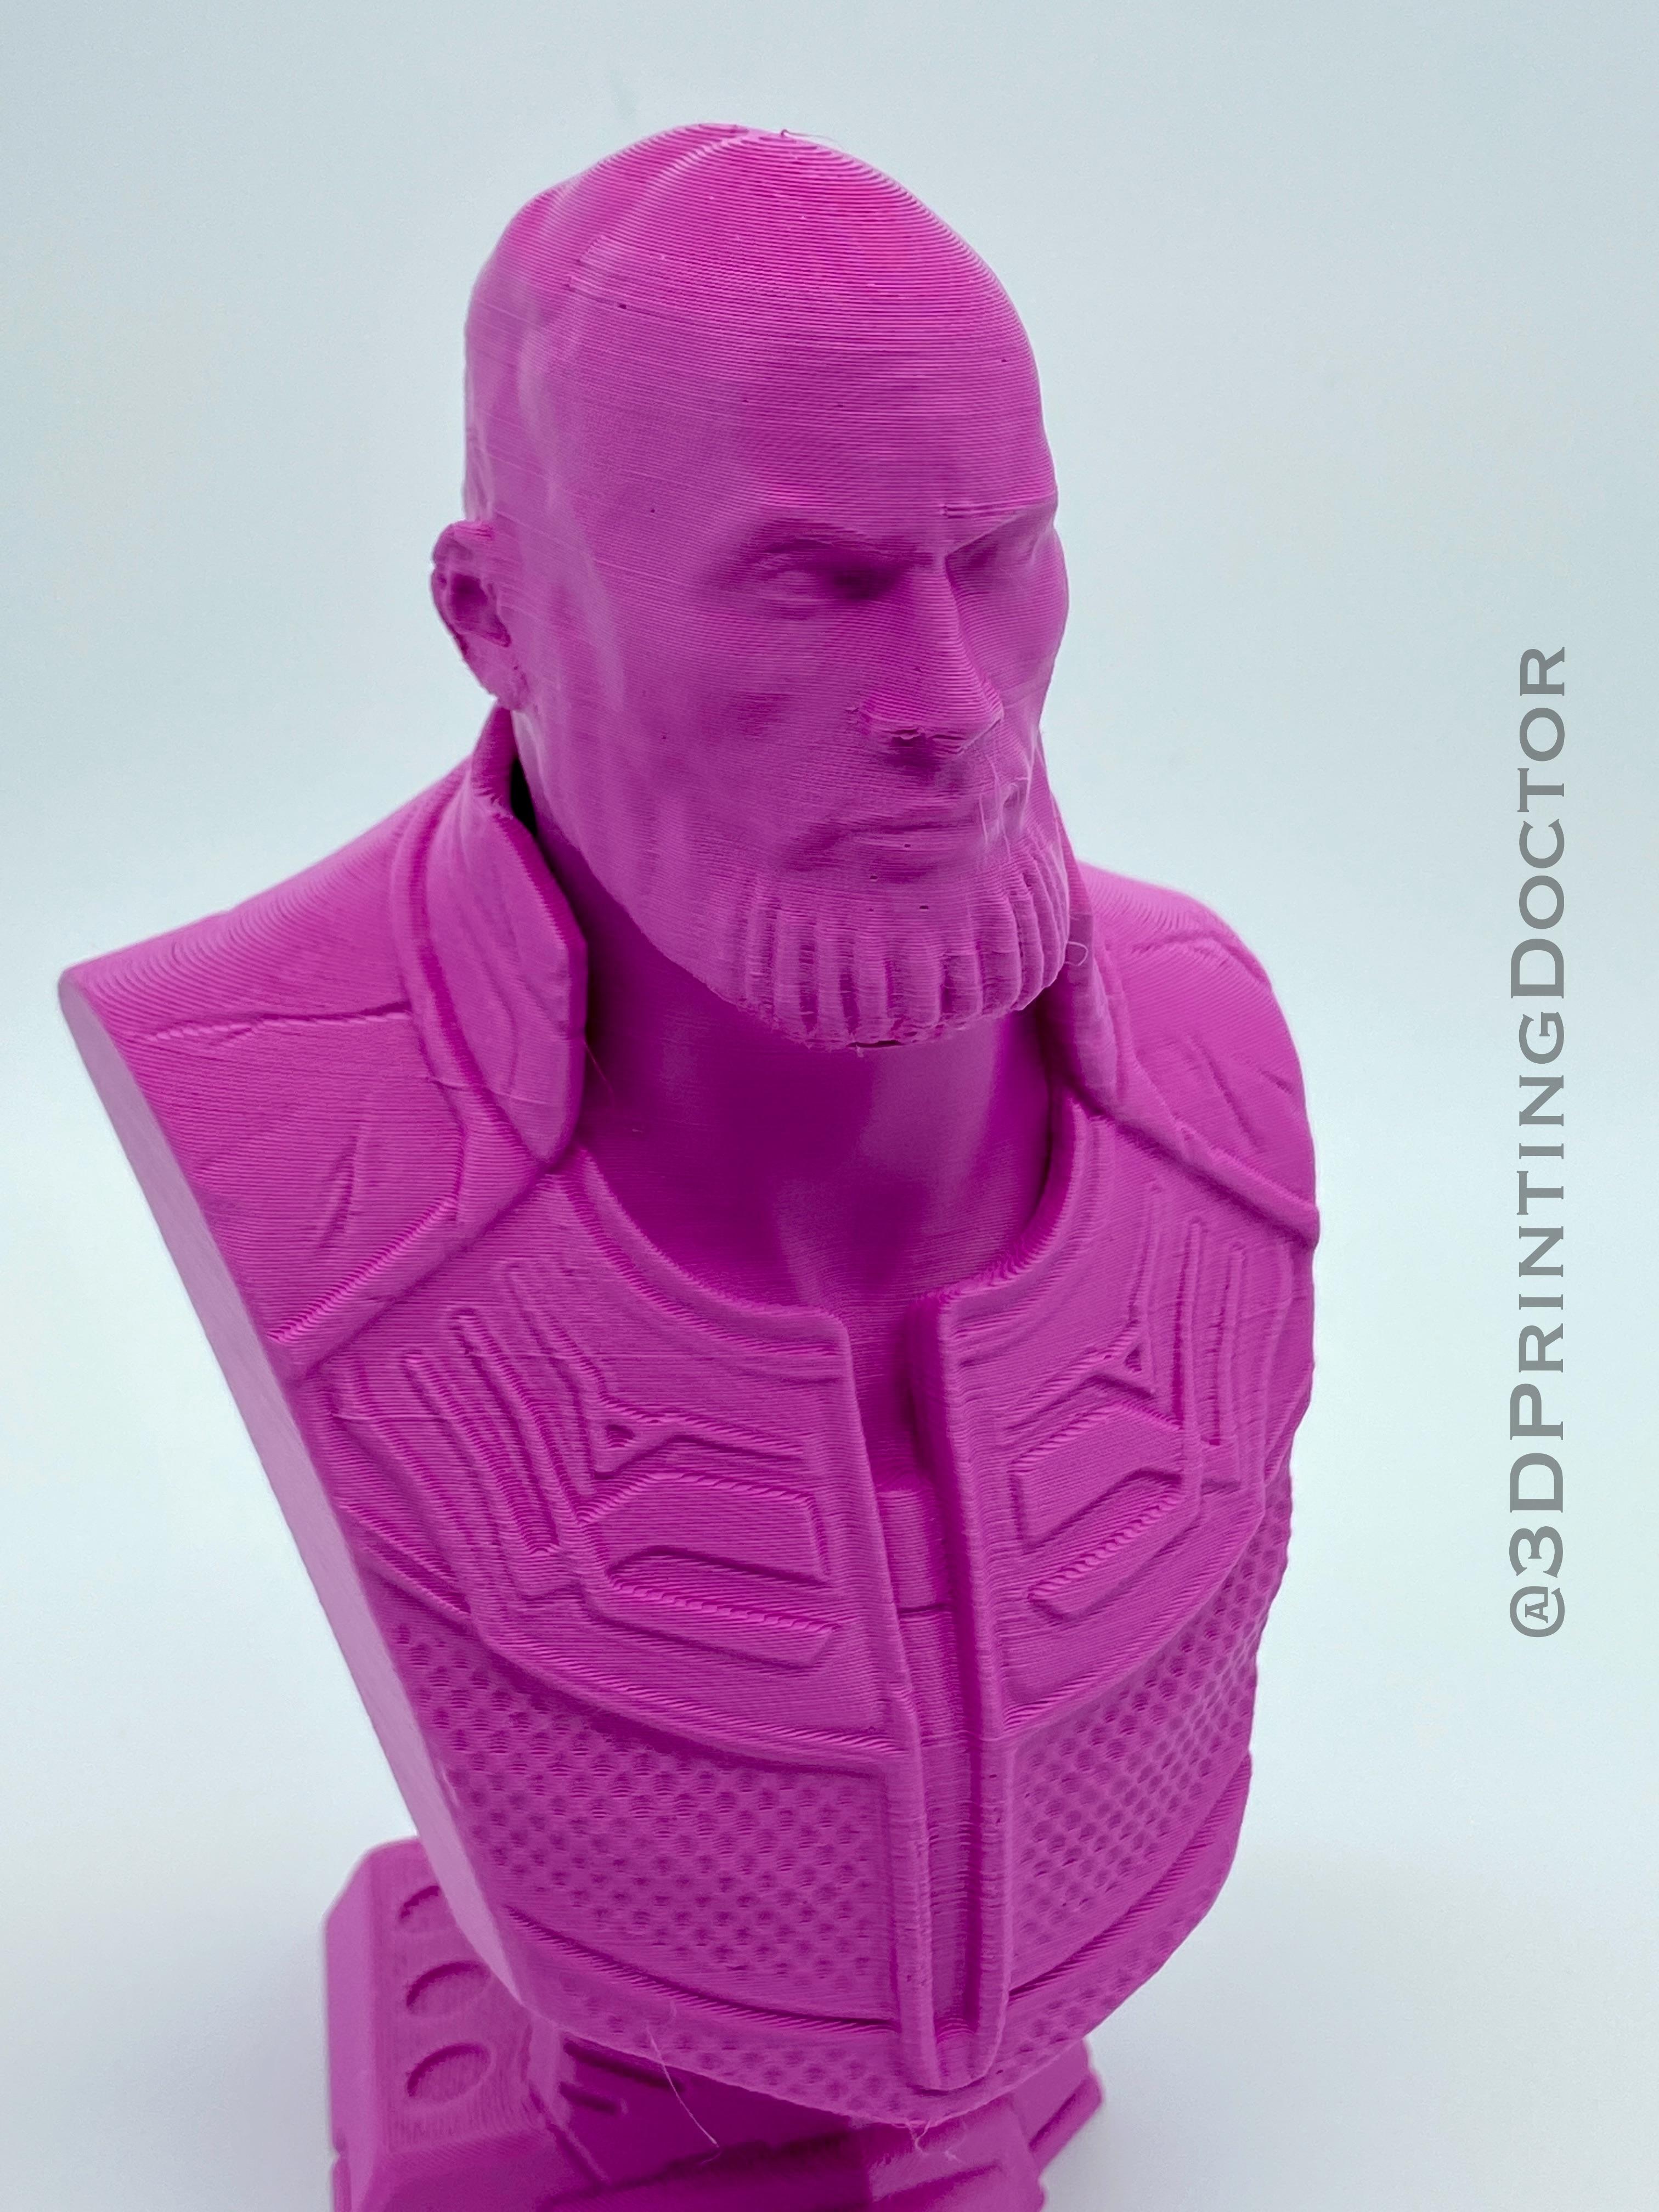 Thanock! (Thanos + The Rock mash up) 3d model